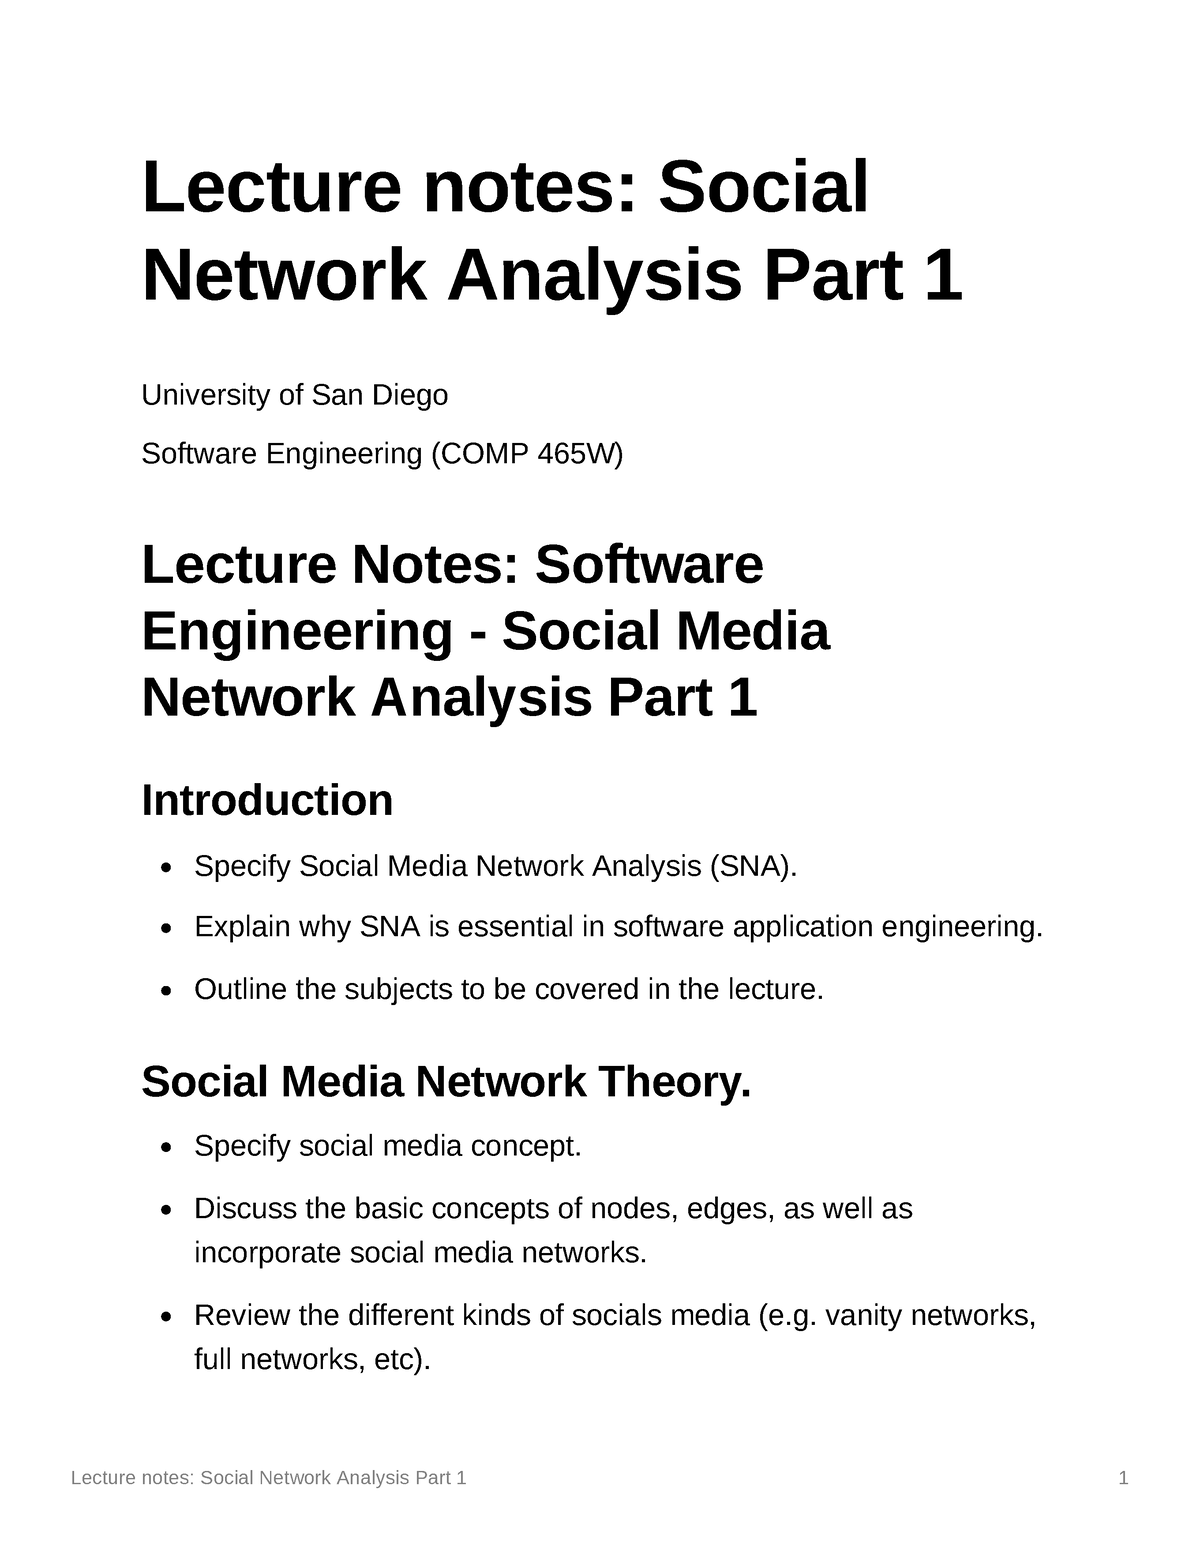 dissertations on social networks